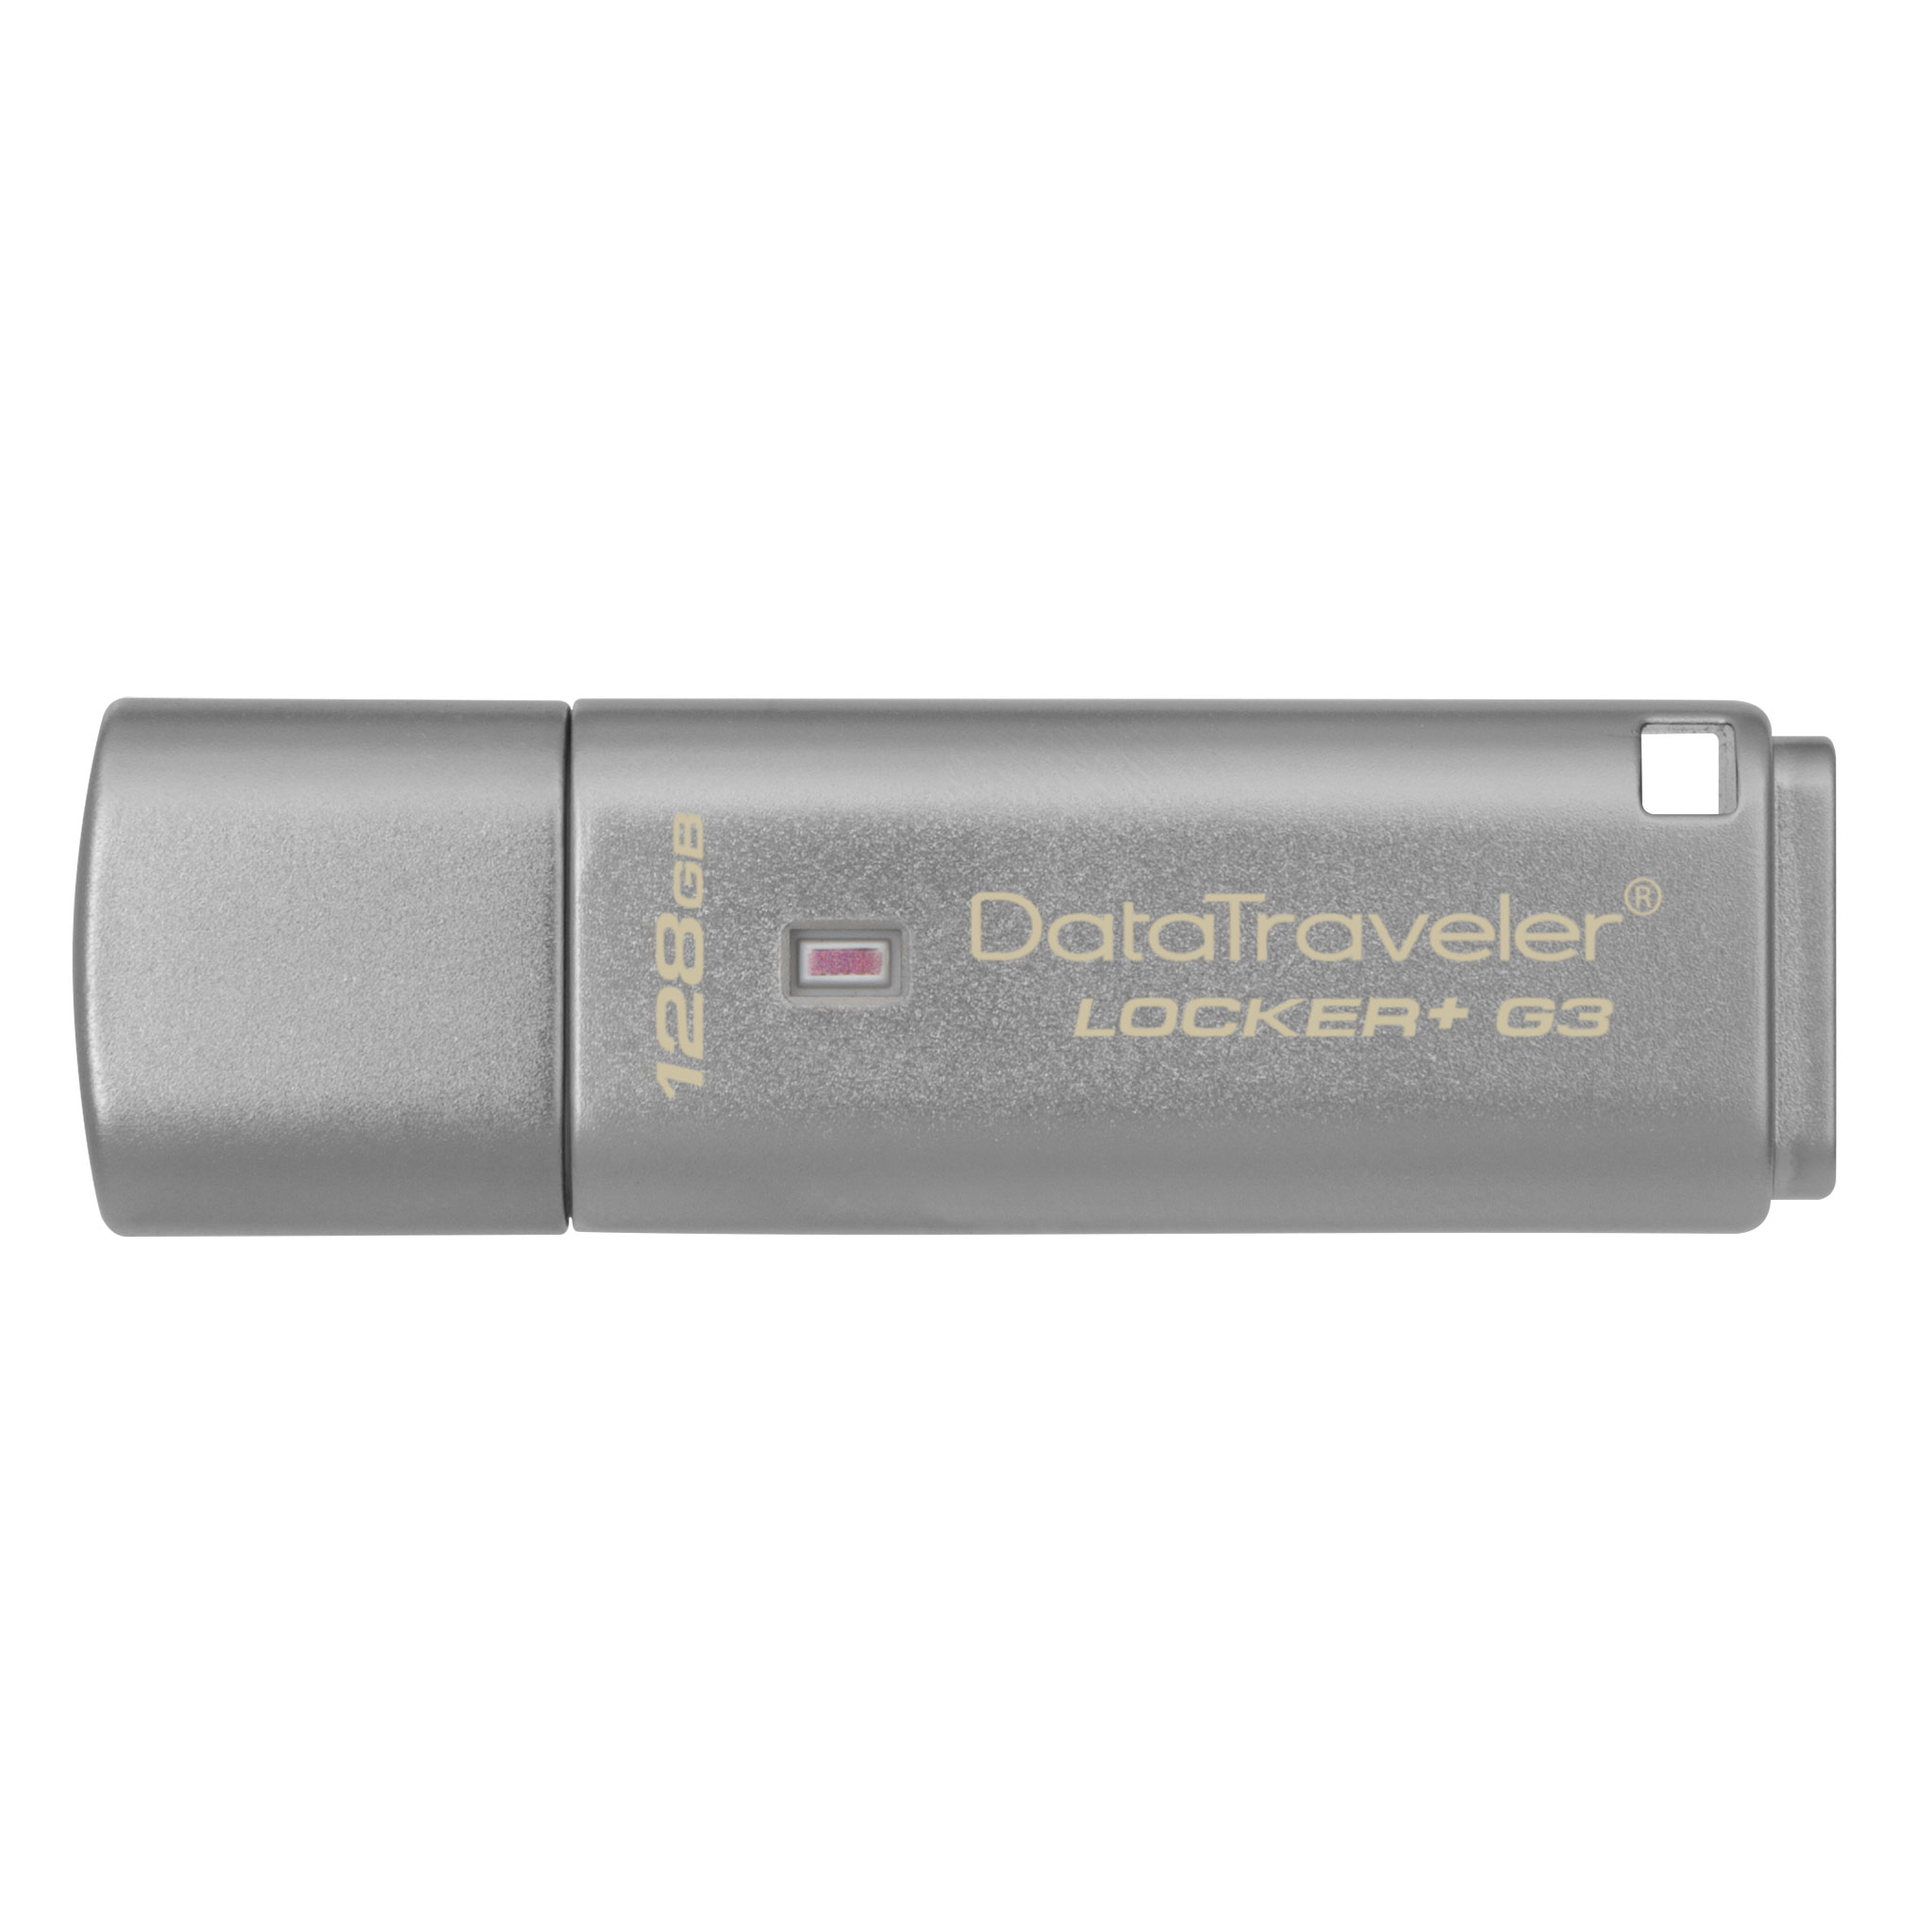 Kingston DataTraveler Locker+ G3 128GB Encrypted USB 3.0 (DTLPG3/128GB) - image 1 of 5